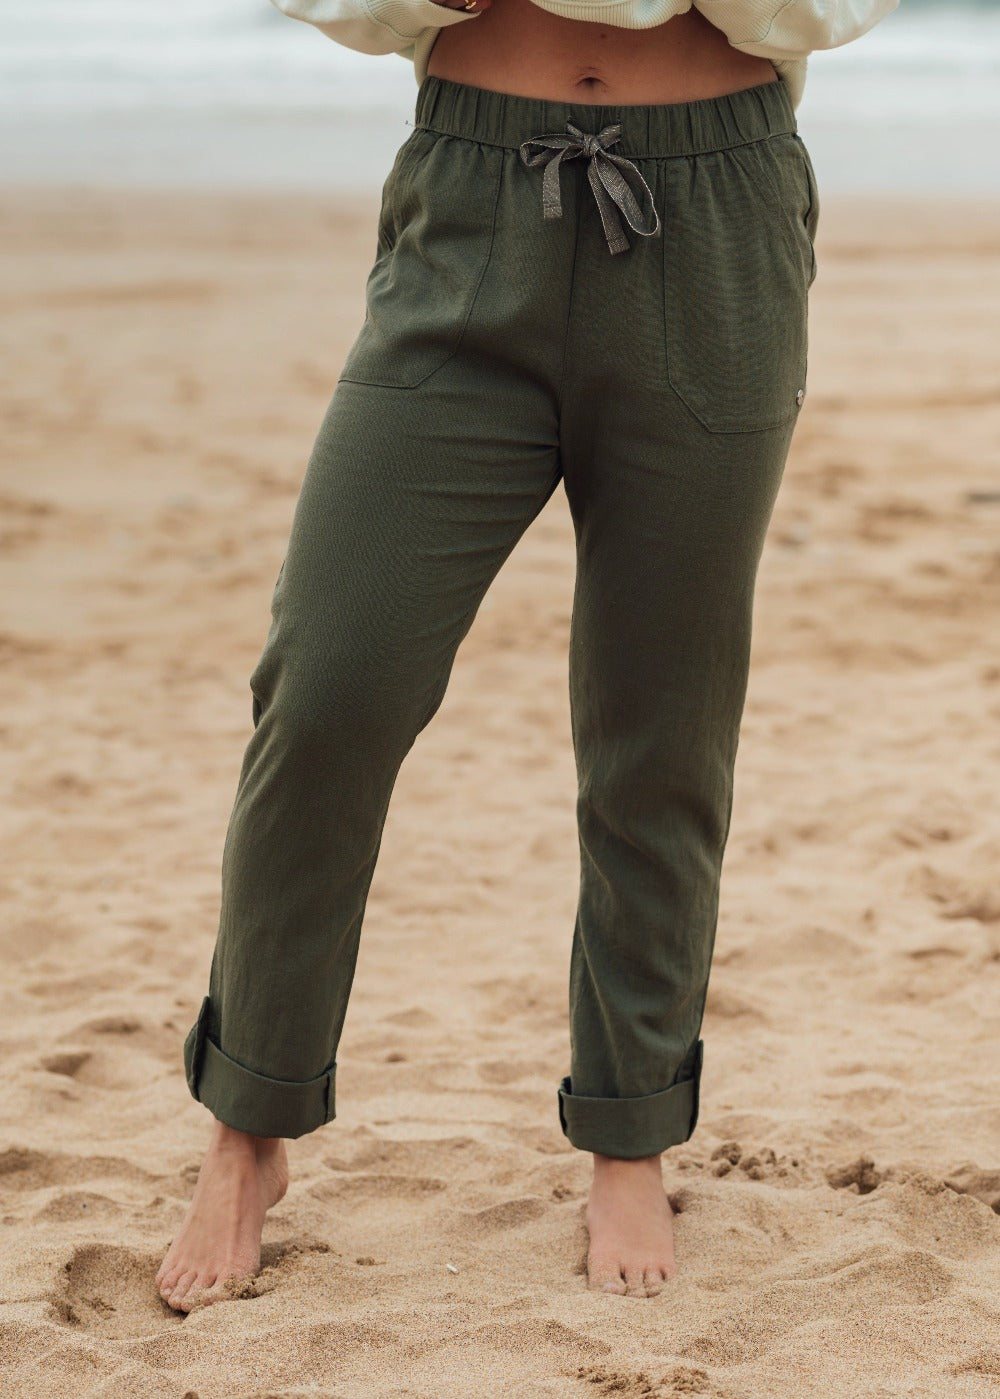 On The Seashore Linen Cargo Trousers by Roxy